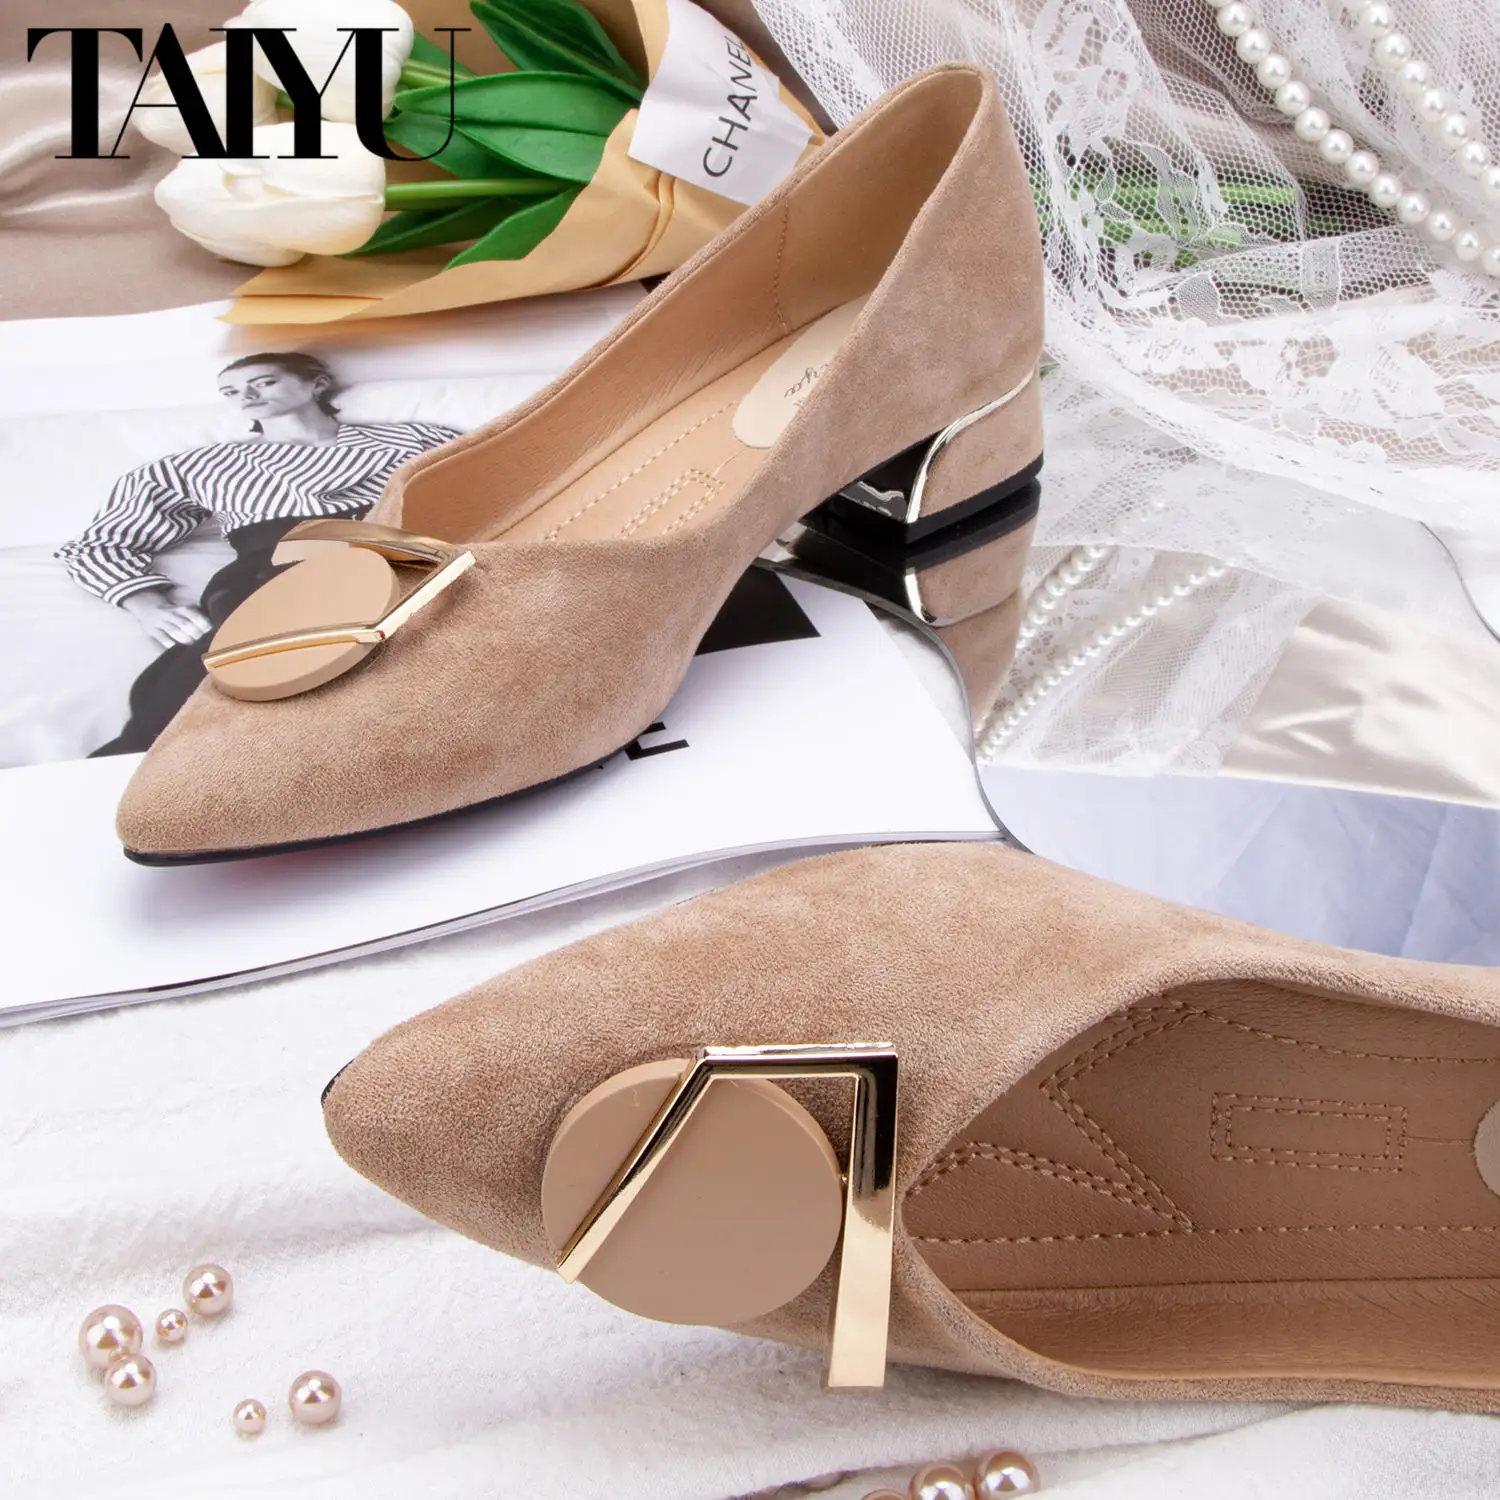 Wholesale taiyu fashion Office Lady Low Chunky Heeled Women Dress Shoes Pointed Toe pu leather women's pumps